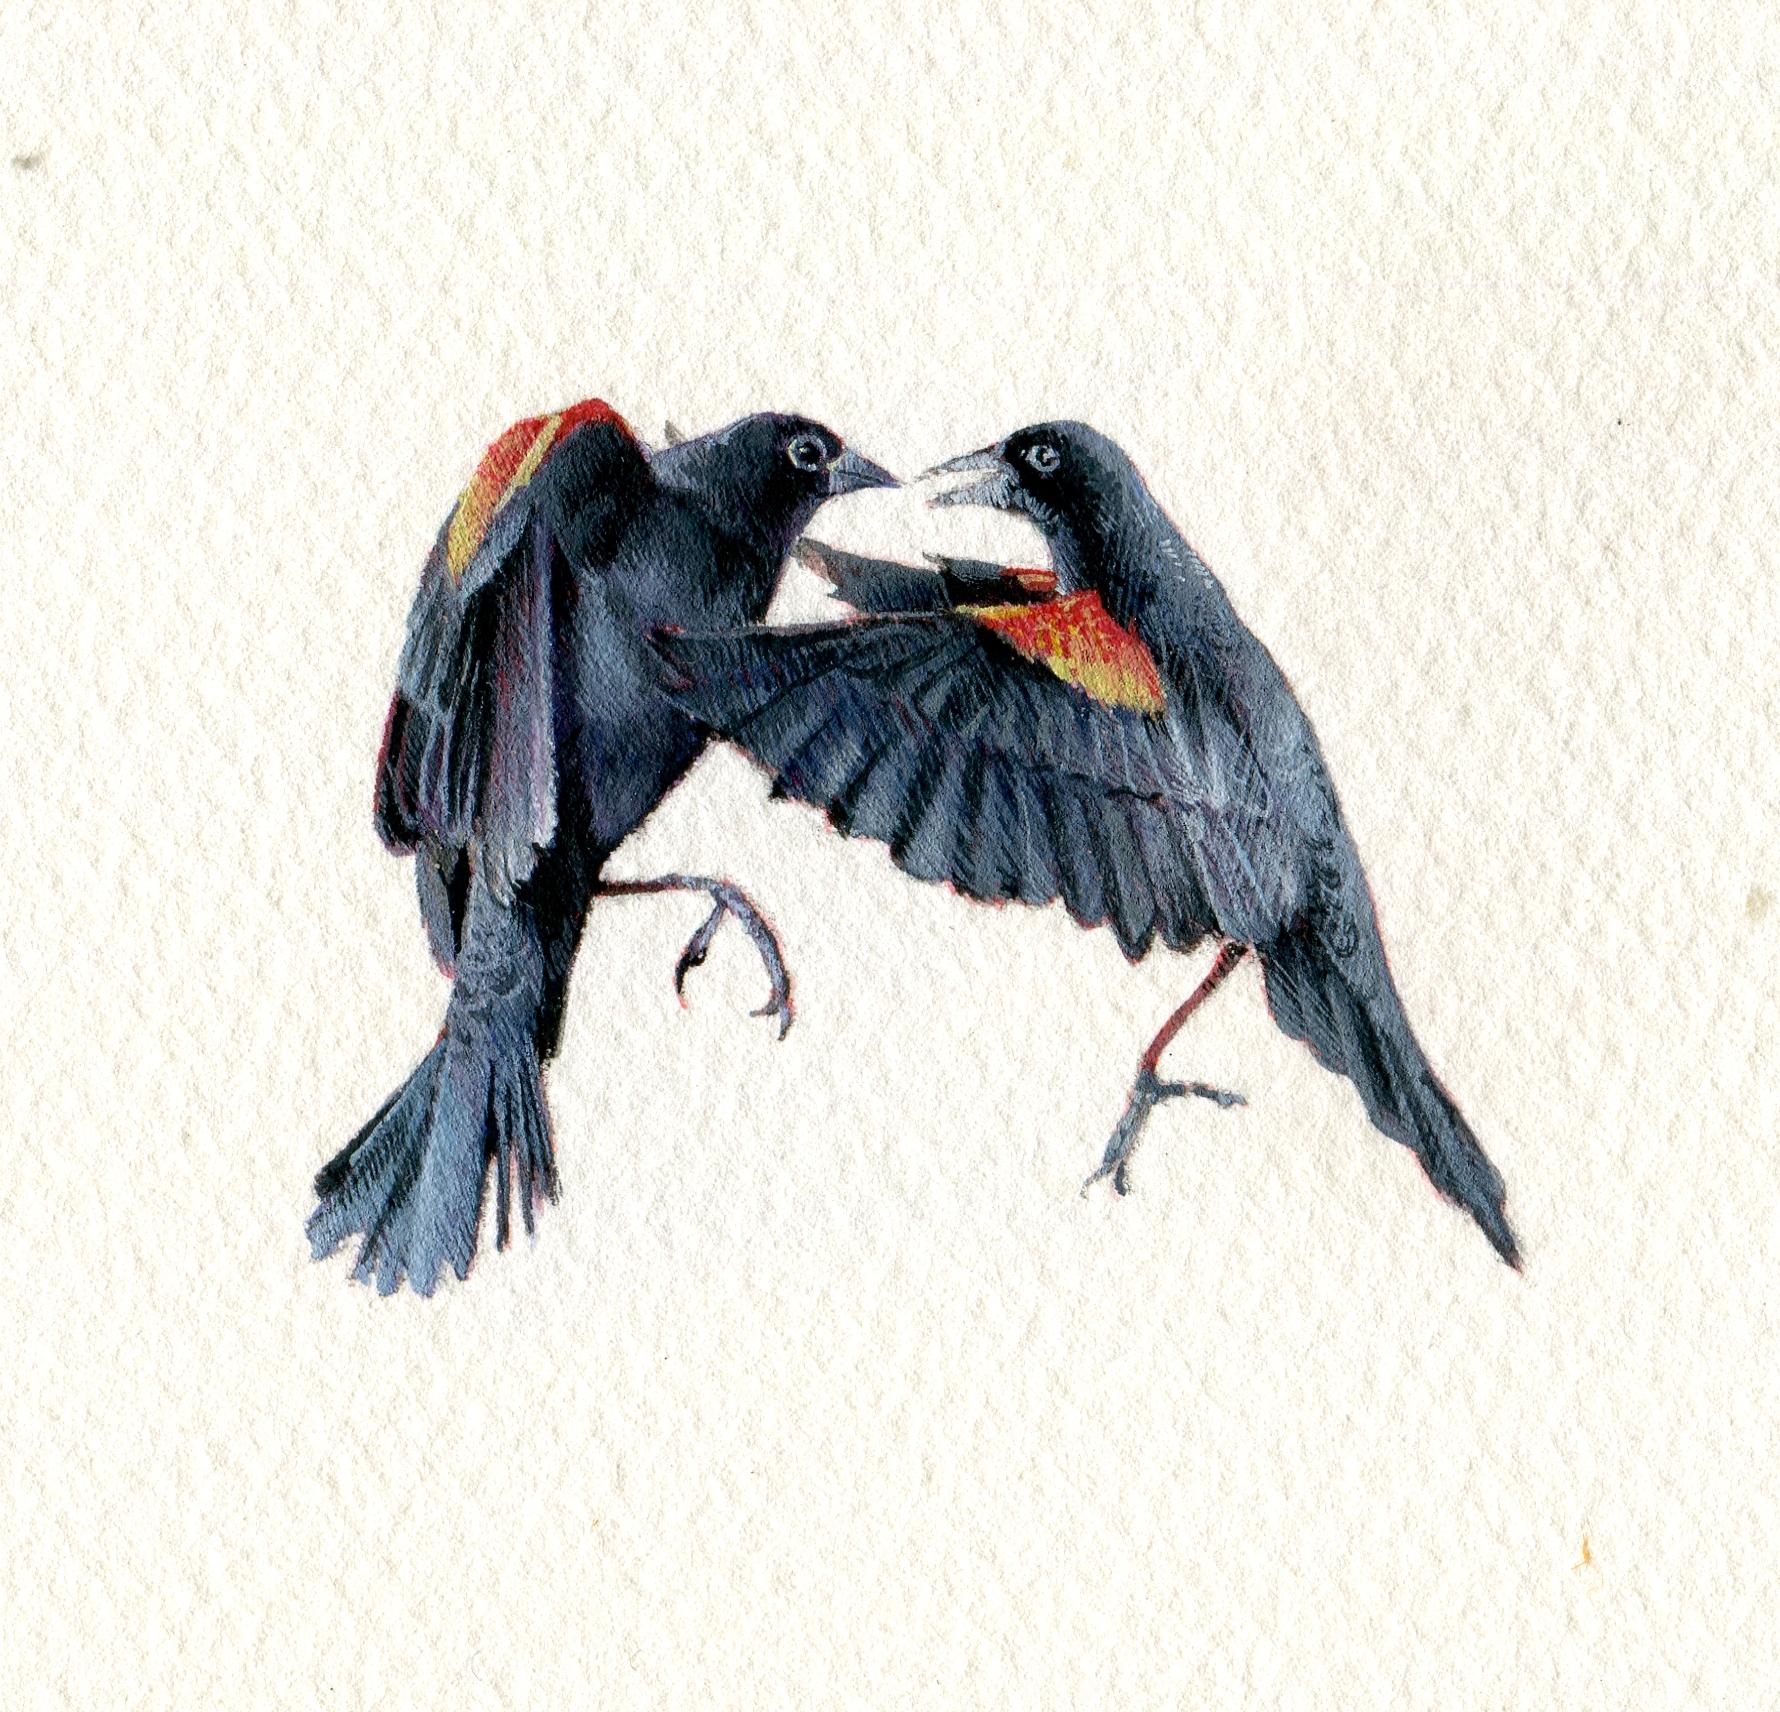 Red-Winged Blackbirds, realist gouache on paper miniature bird portrait, 2020